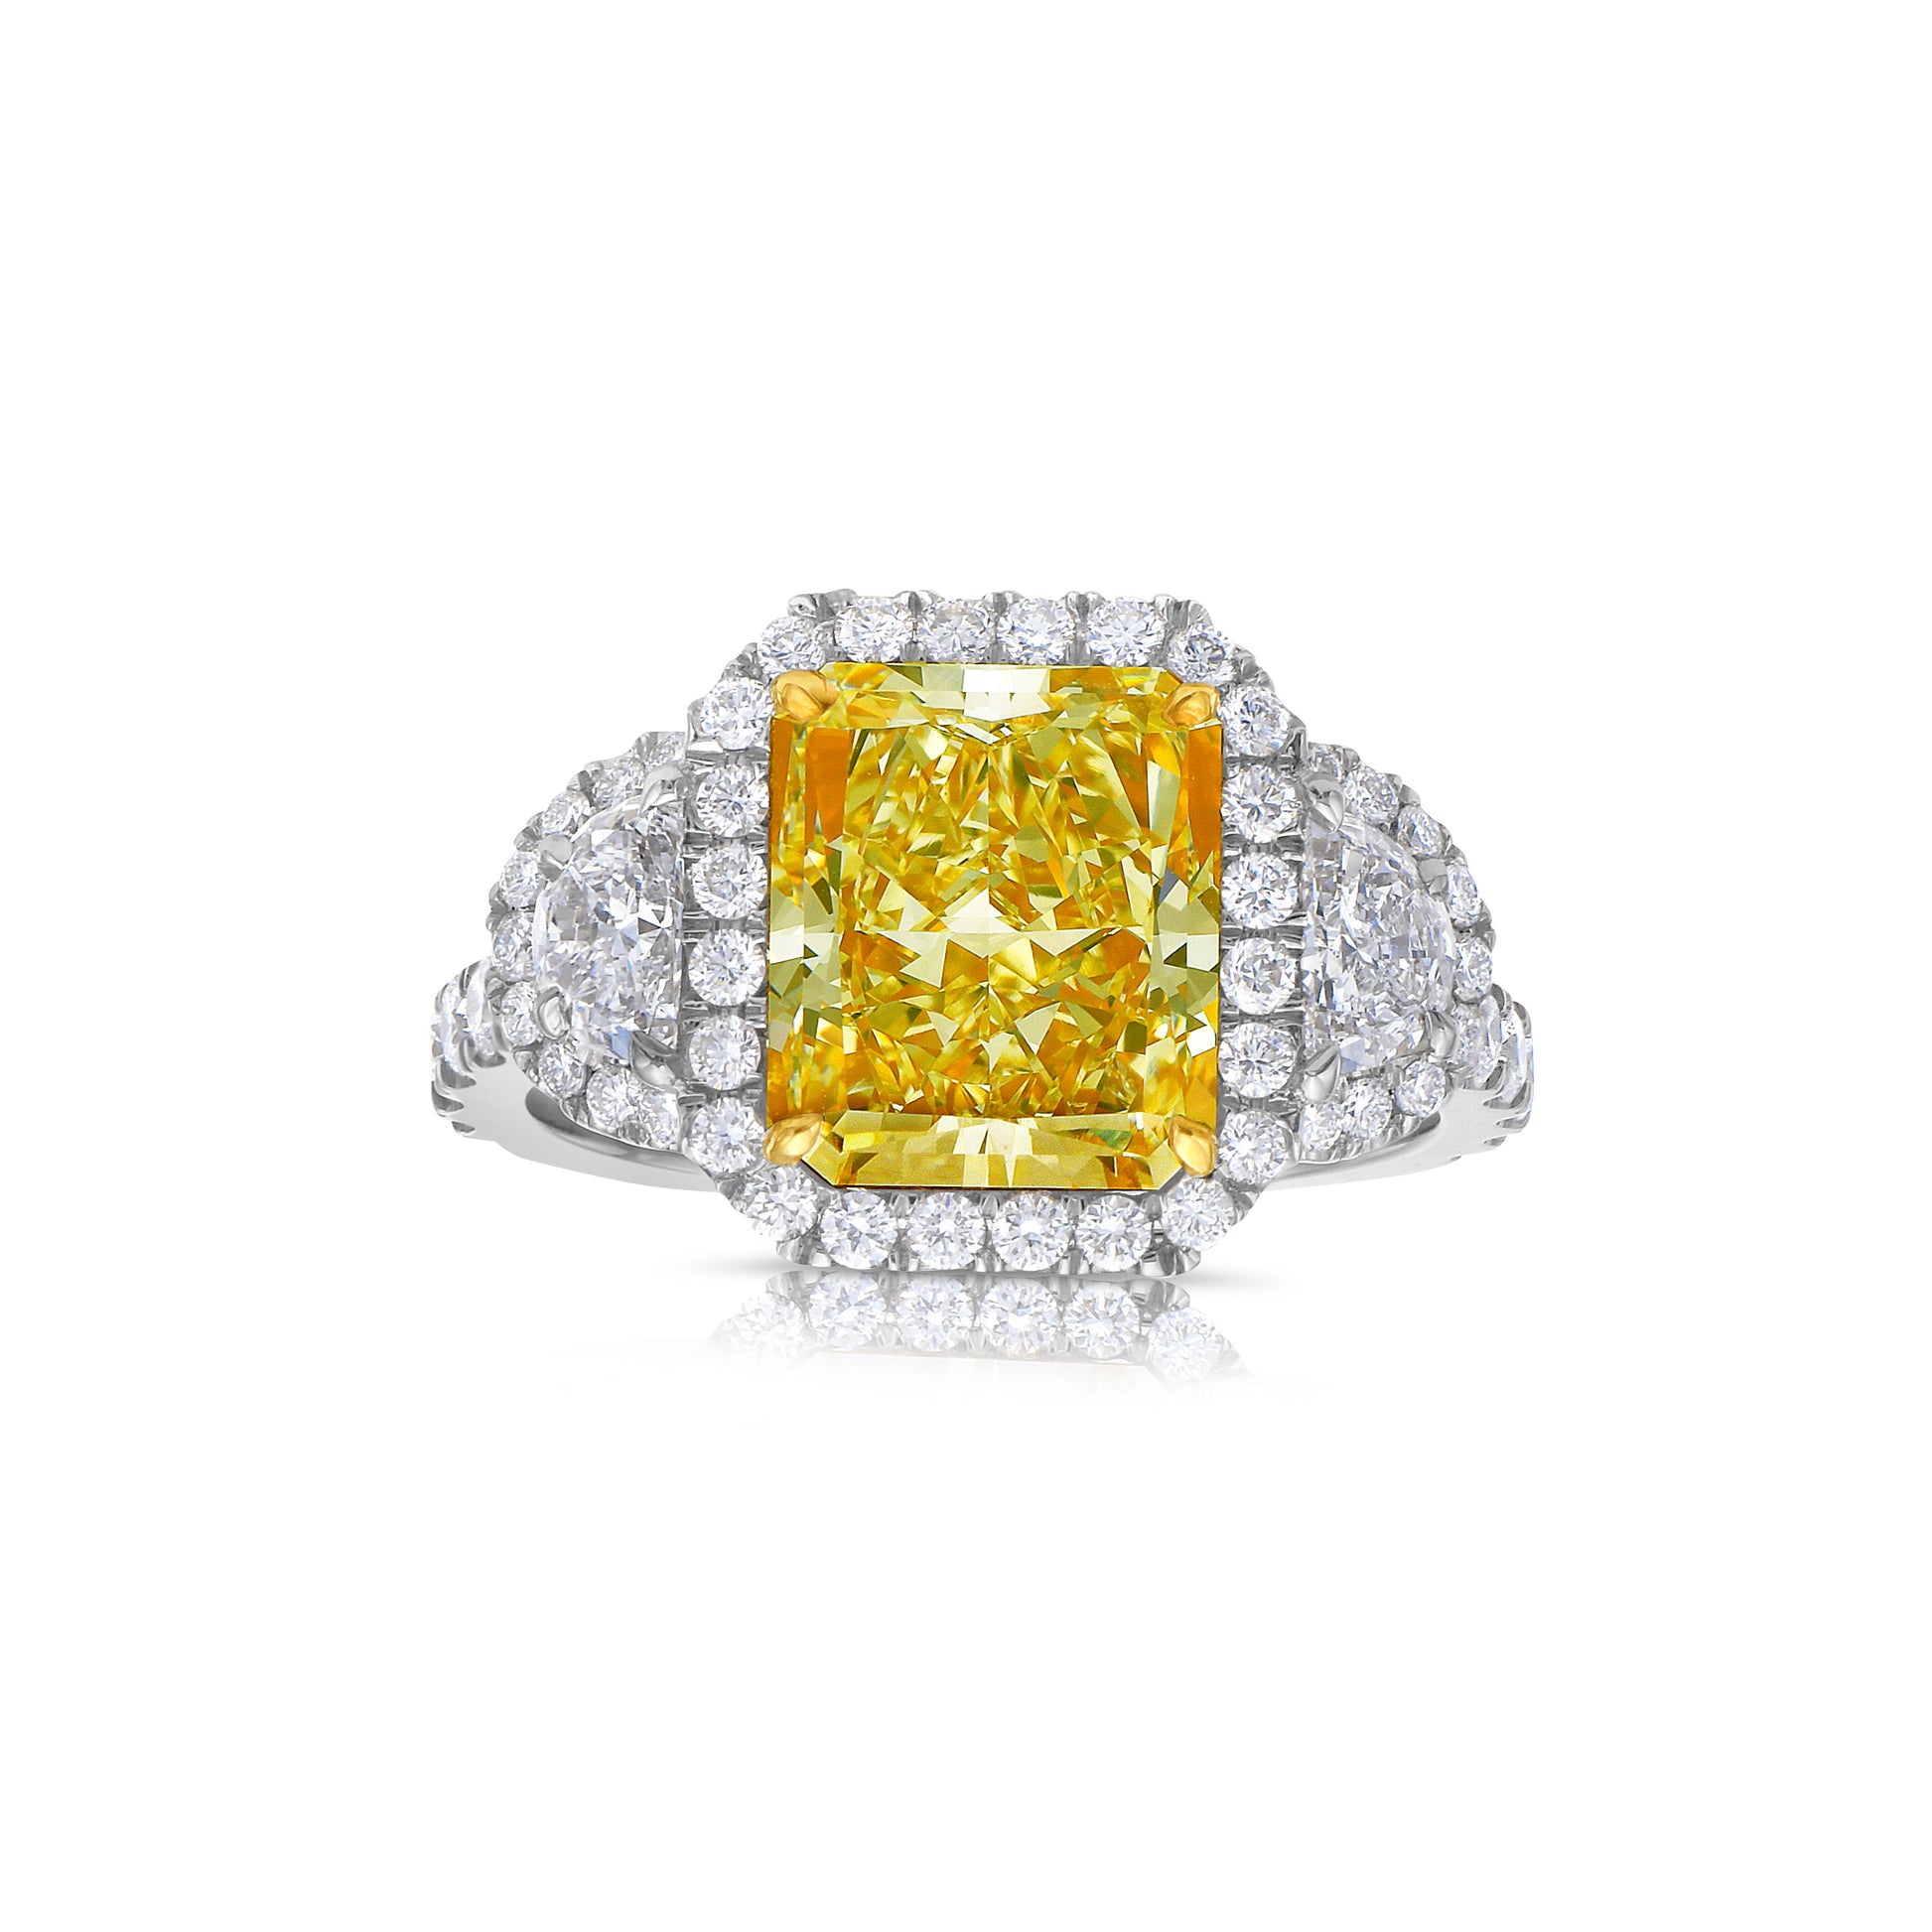 3ct light yellow diamond ring. Yellow diamond halo ring. Yellow diamond jewelry. Yellow diamond engagement